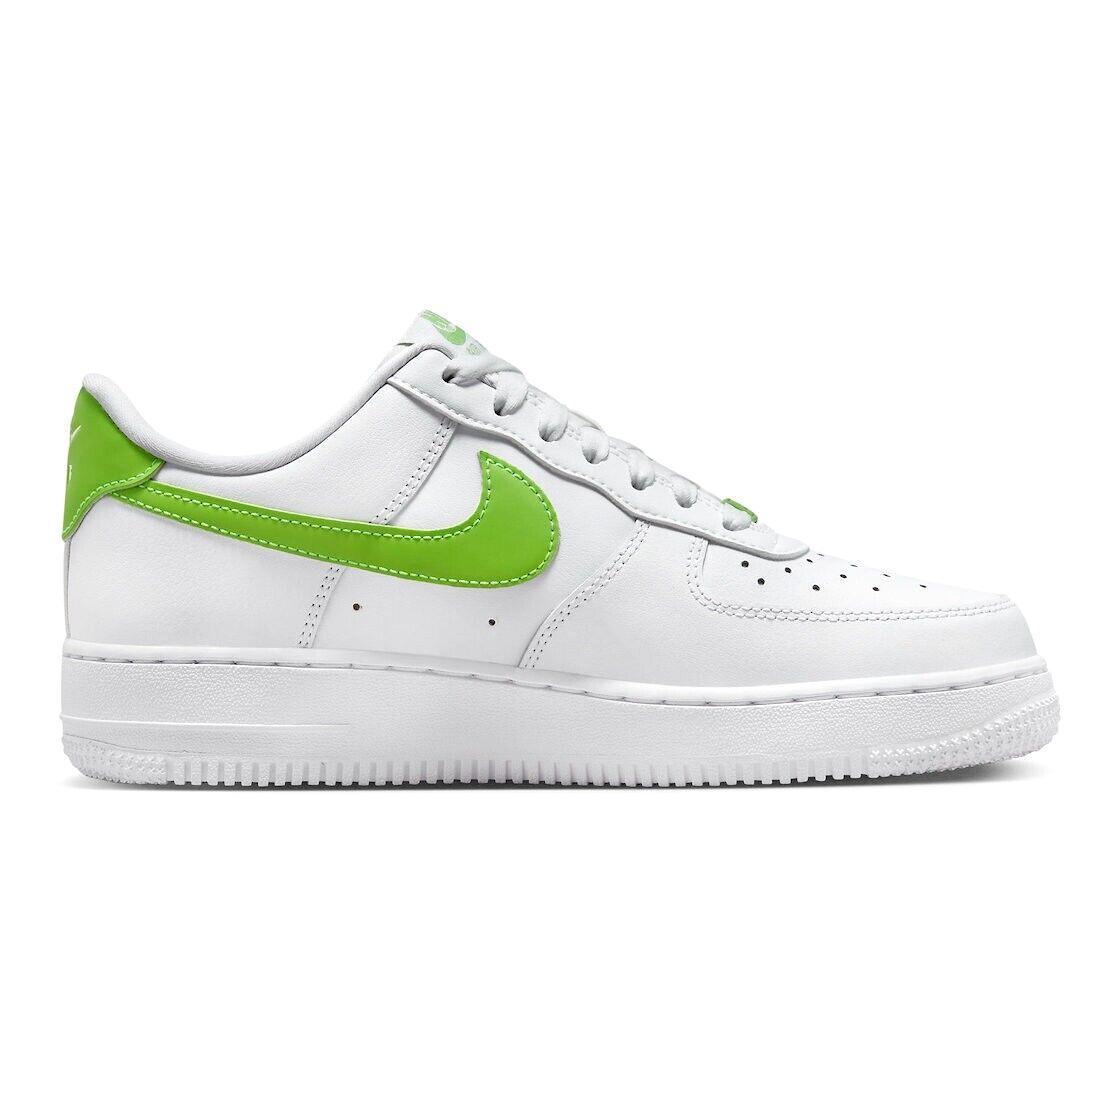 Nike Air Force 1 07 Mens Size 8.5 Shoes DD8959 112 White Green wm sz 10 - White